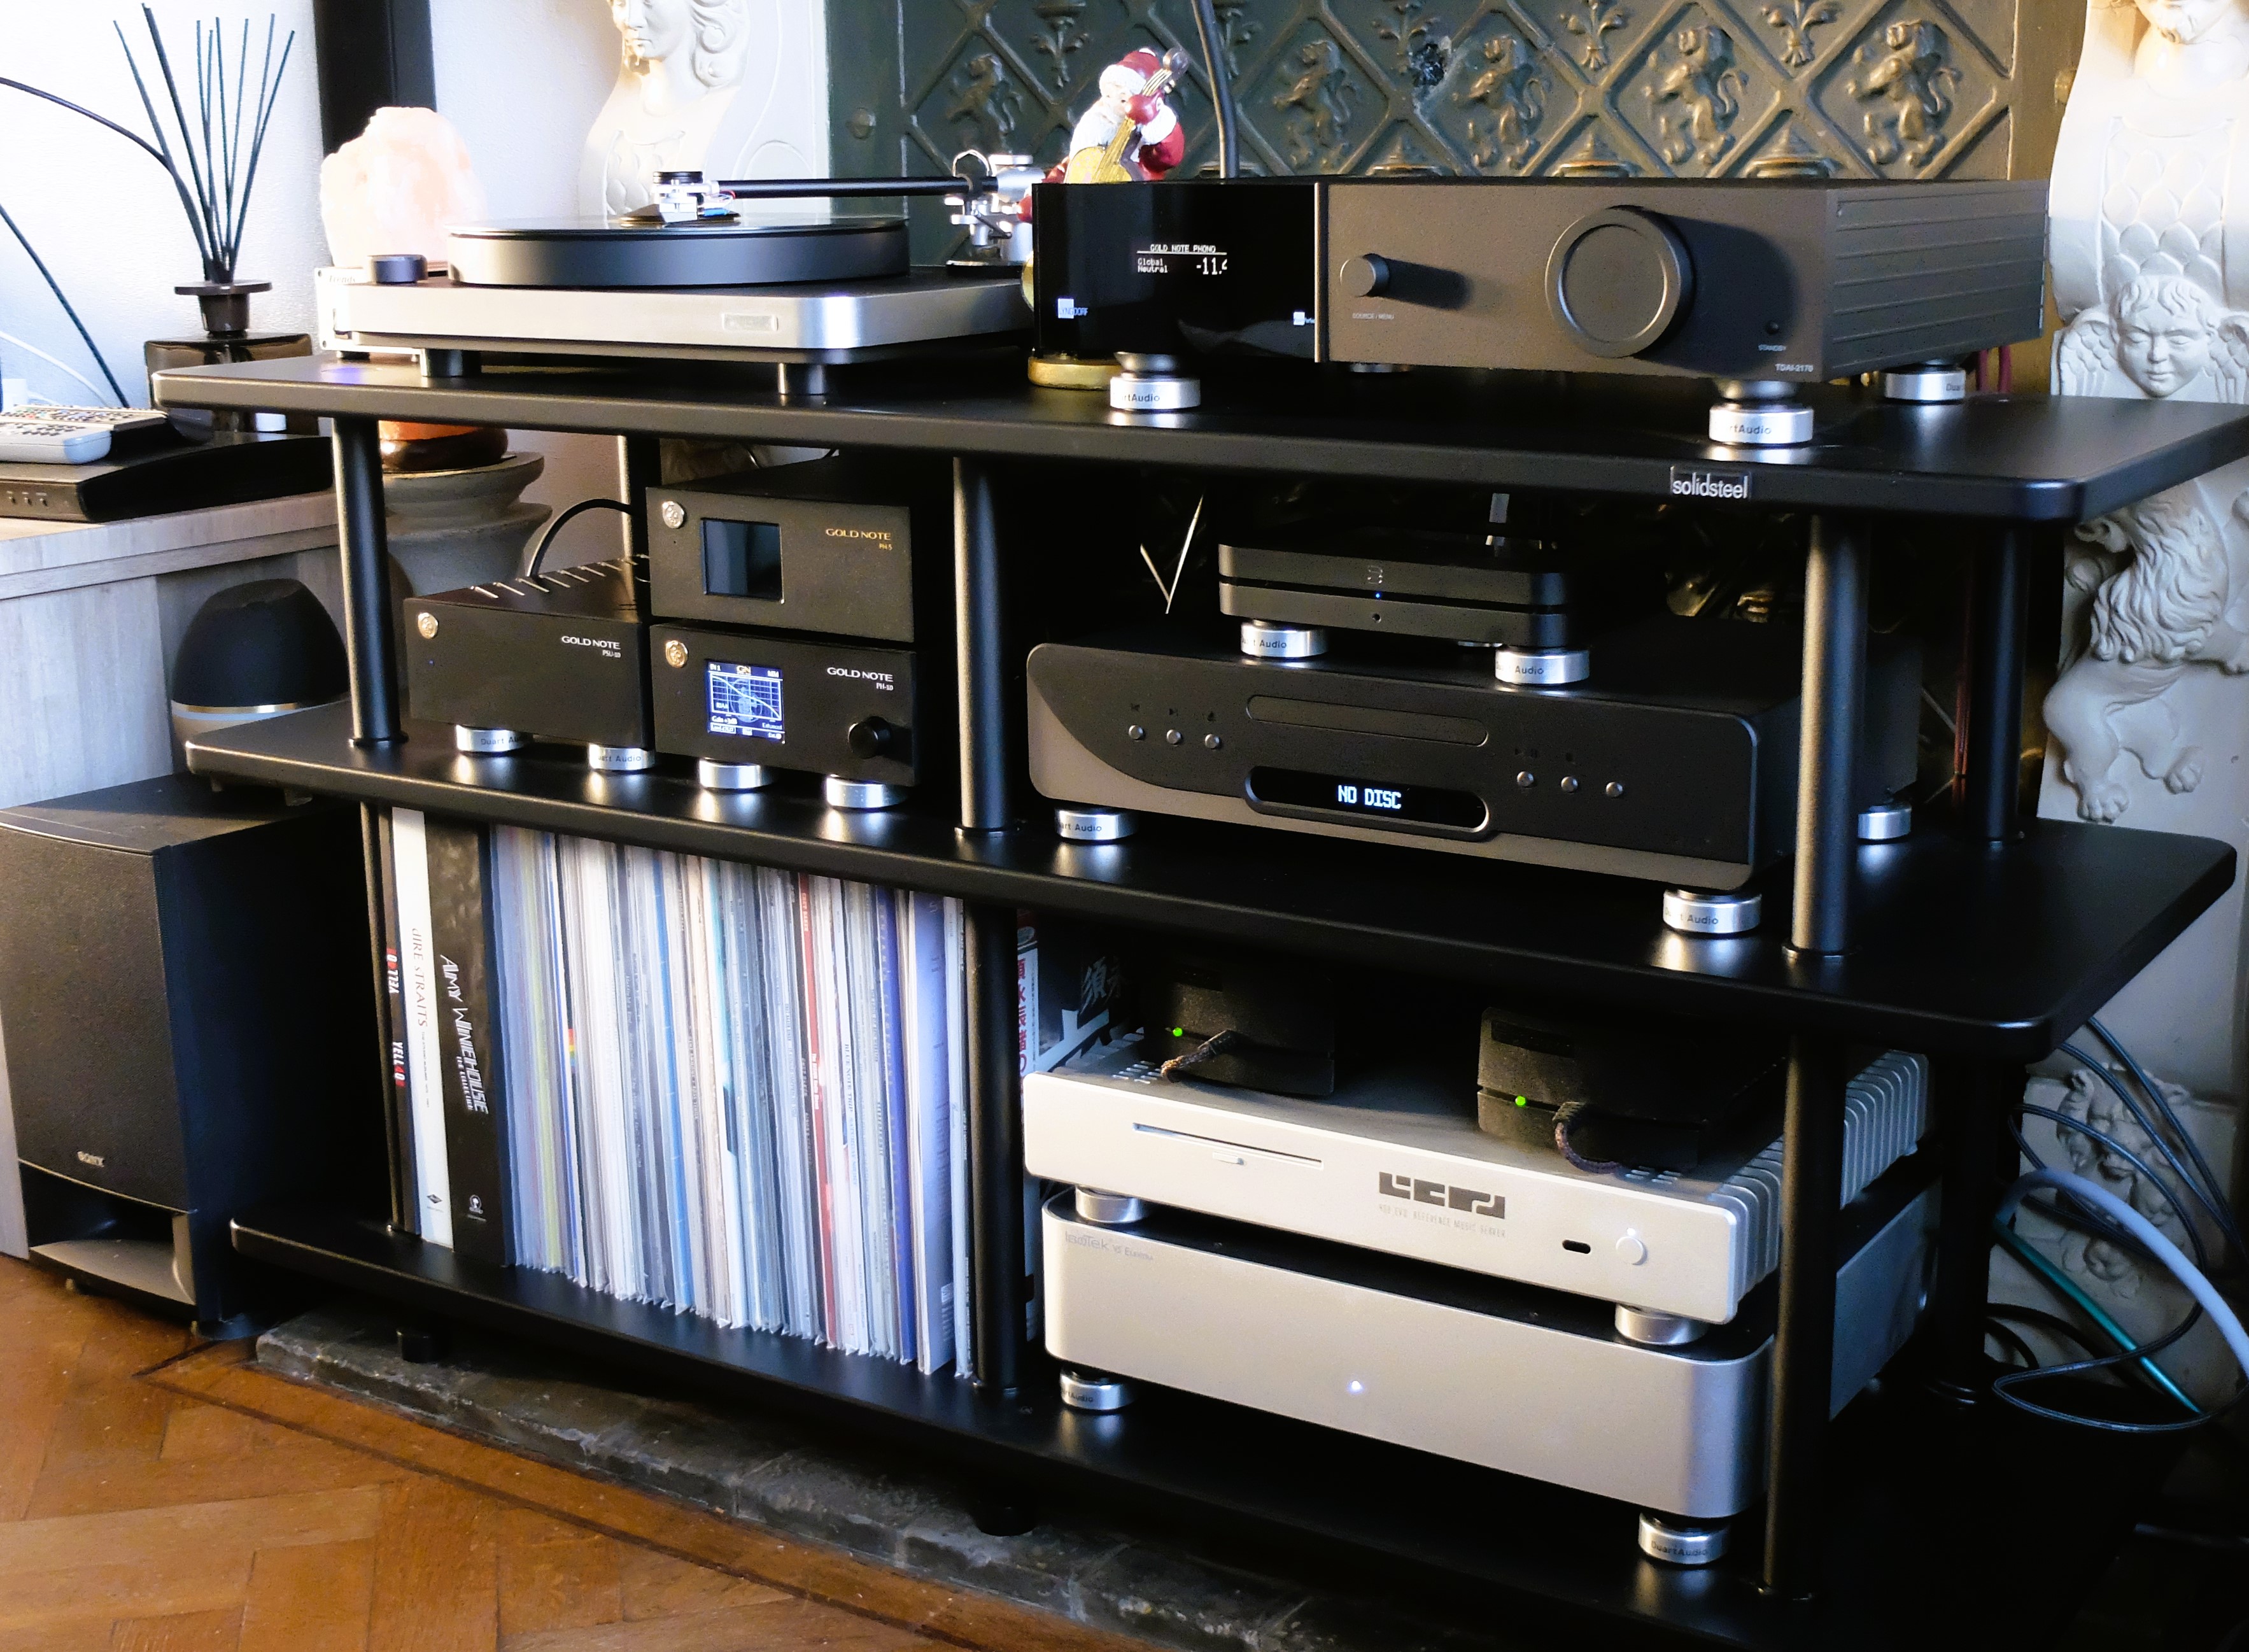 Solidsteel - VL Series Modular Vinyl Library Audio Rack - Music Direct